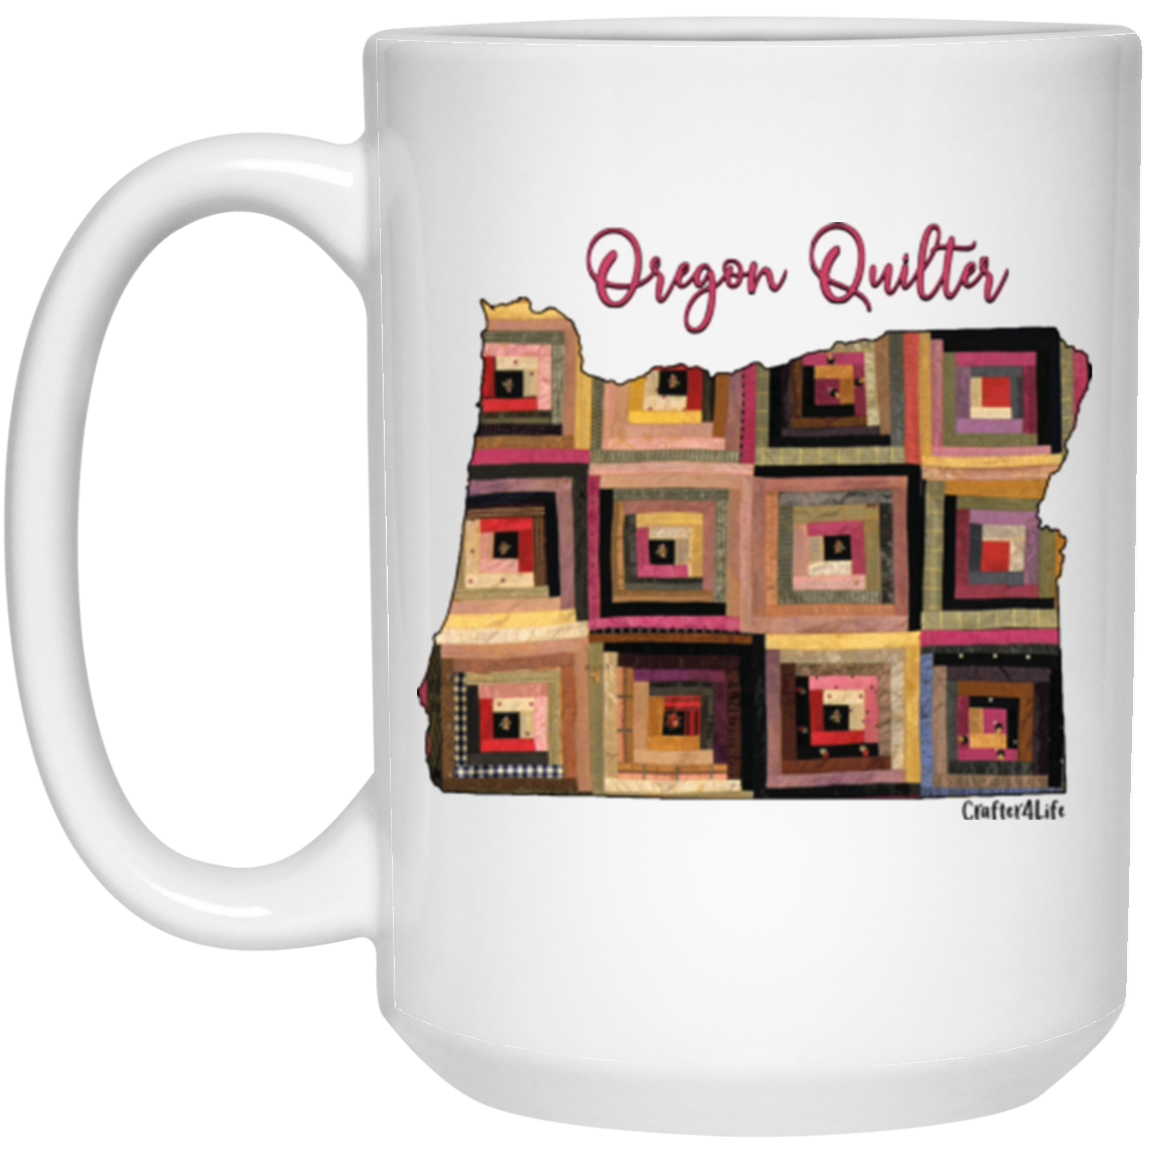 Oregon Quilter Mugs